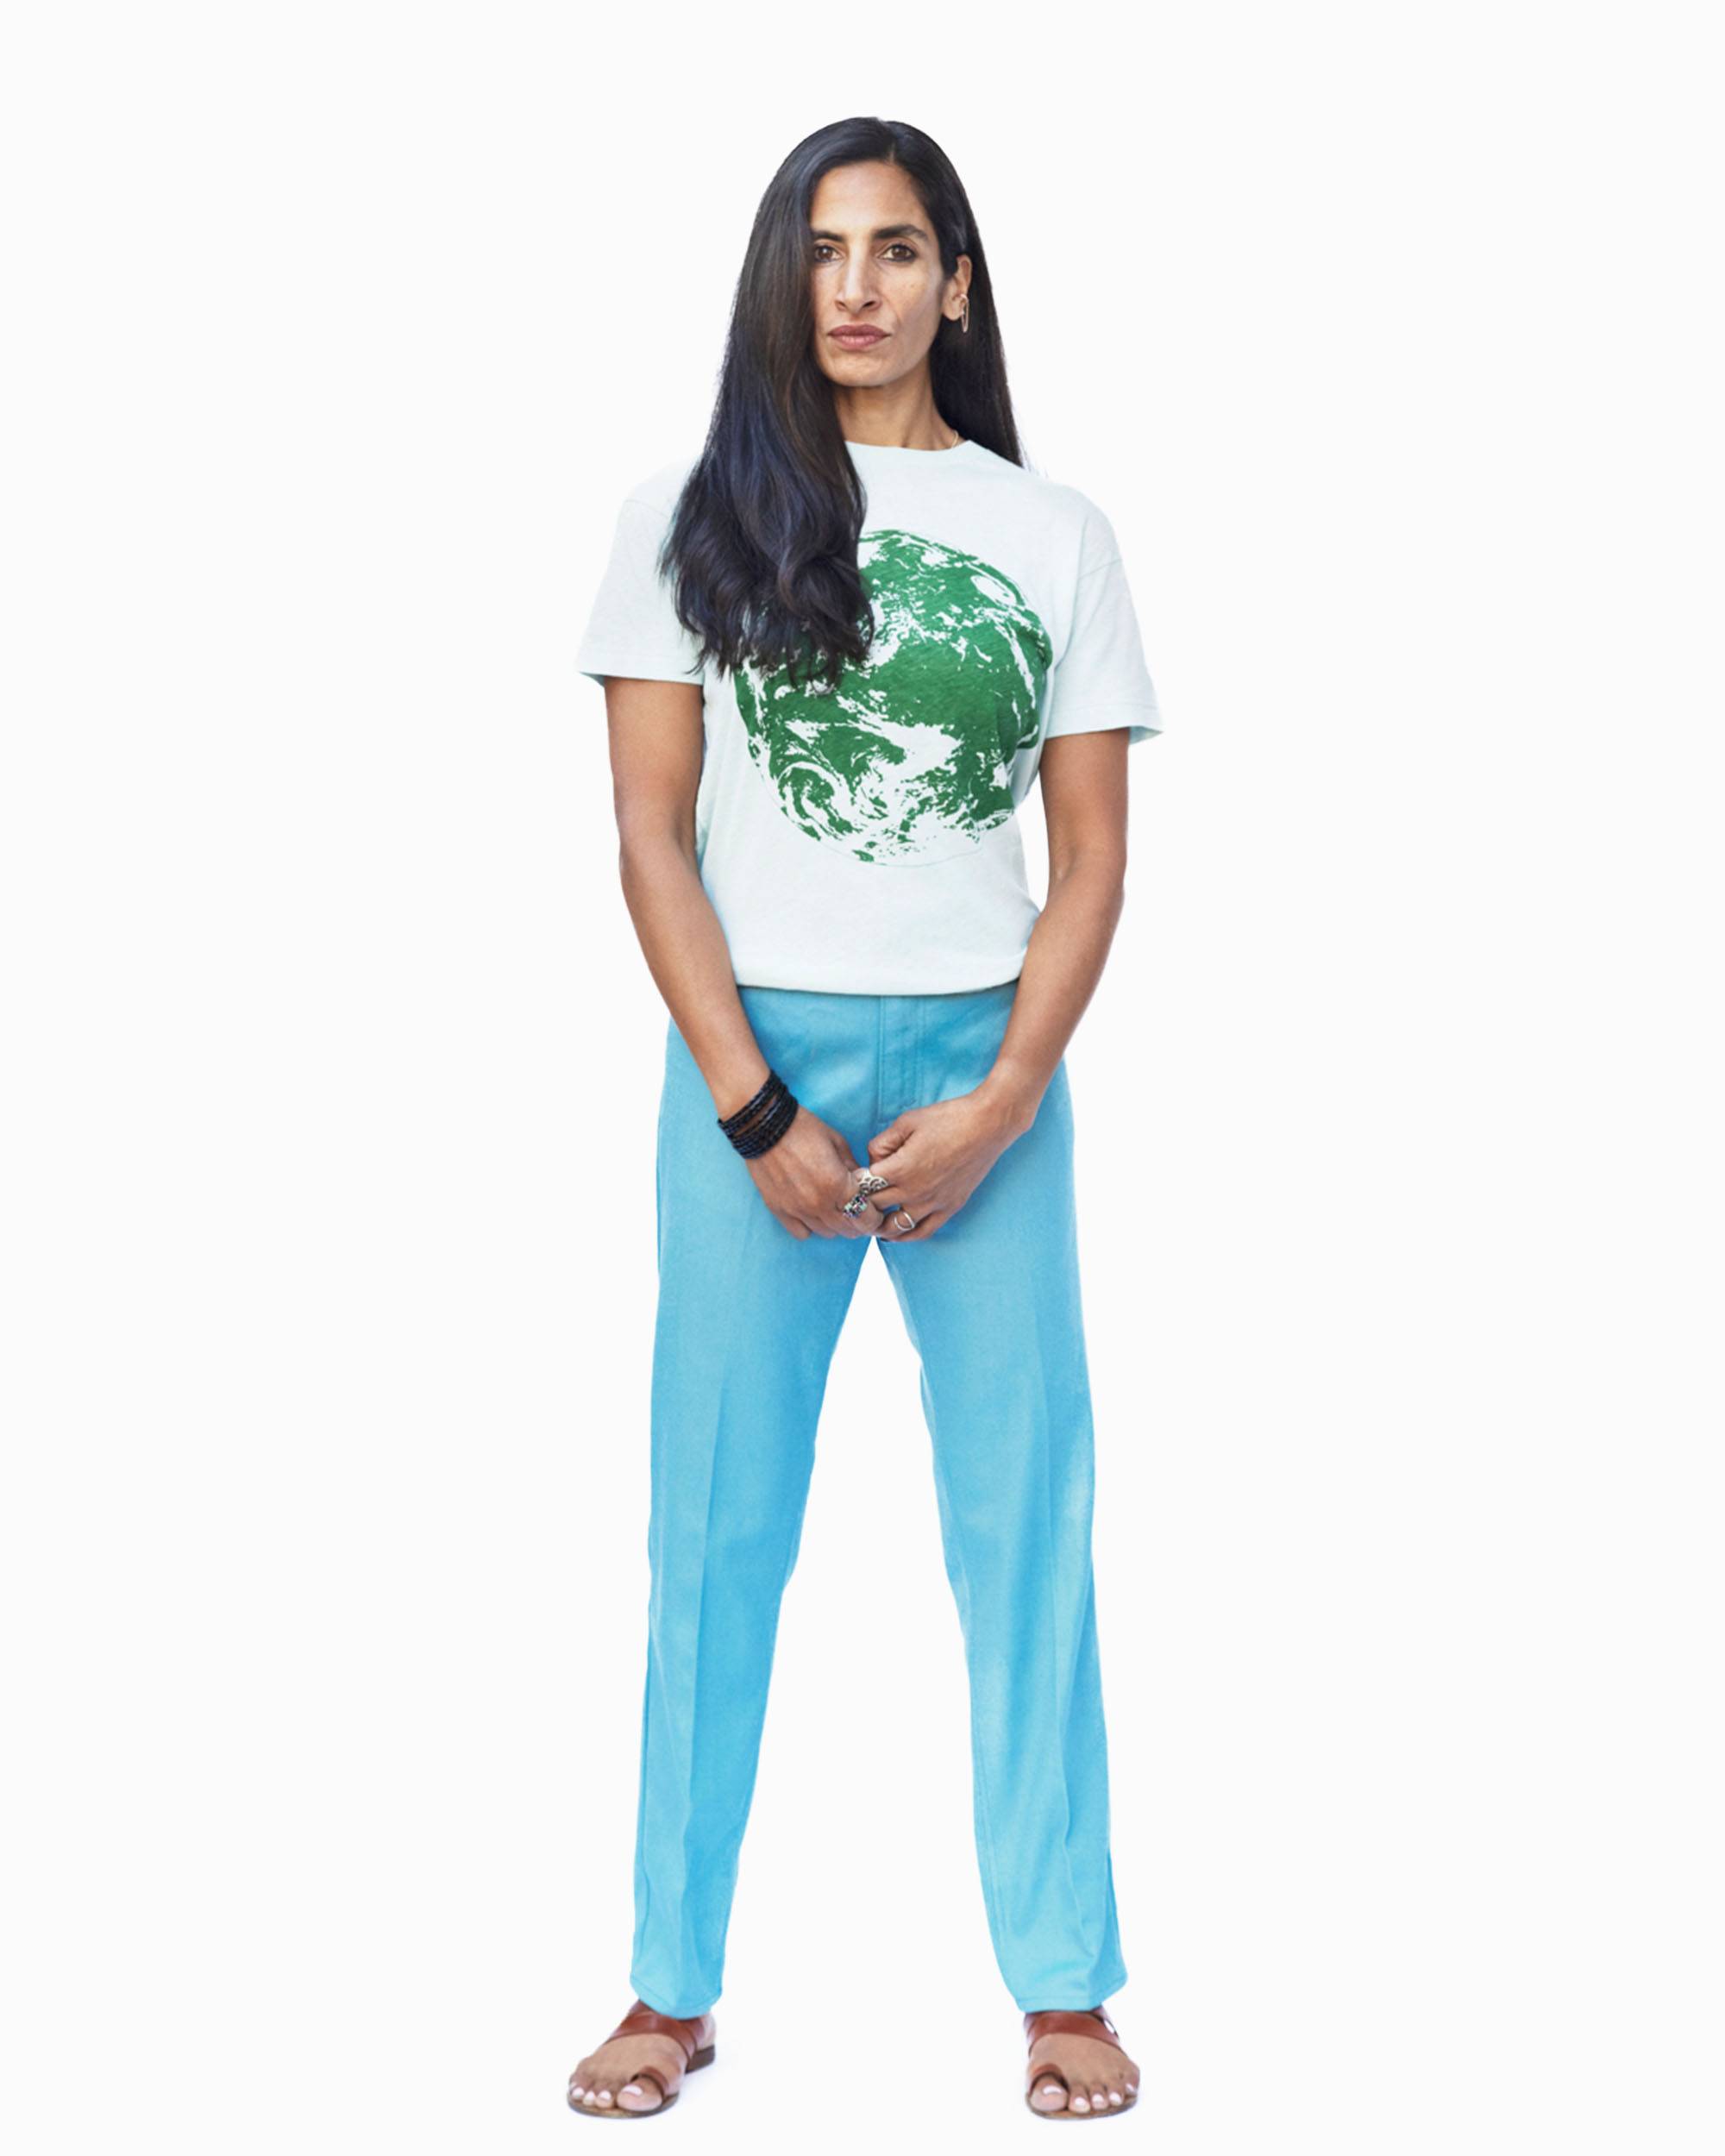 Image of woman wearing shirt and pants